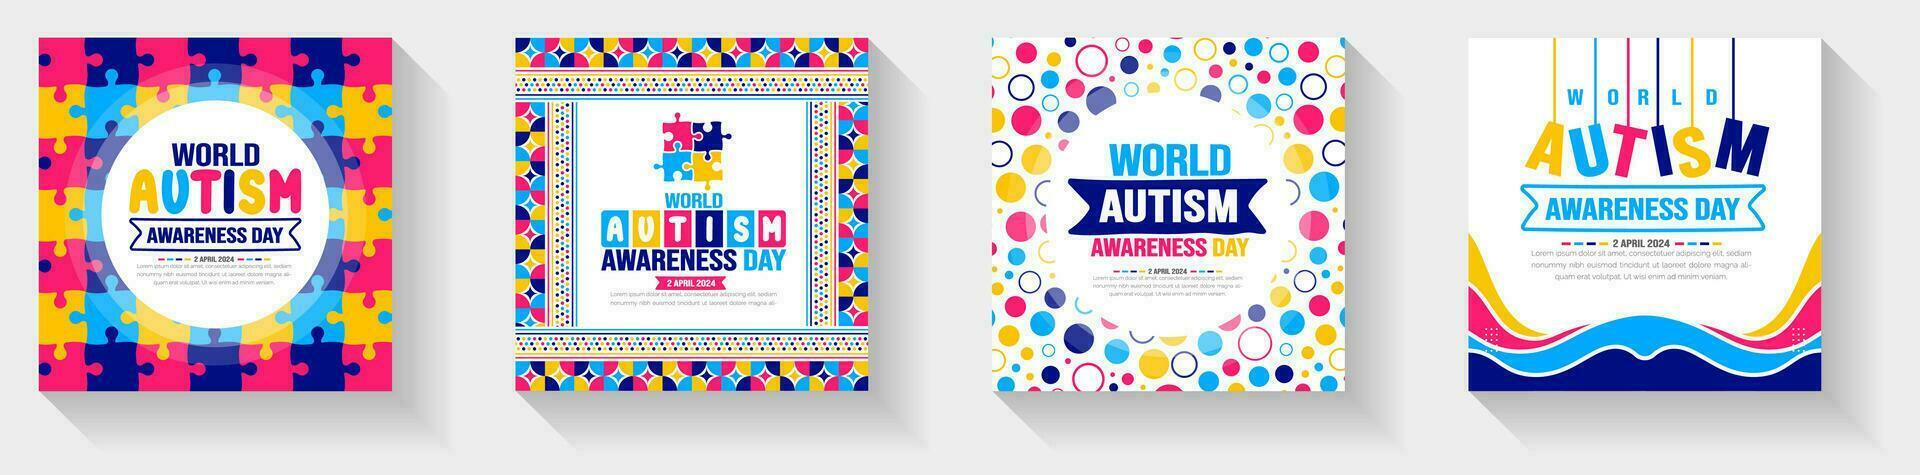 mundo autismo conciencia día tipografía pegatina o social medios de comunicación enviar bandera diseño modelo conjunto celebrado en 2 abril. utilizar a fondo, bandera, tarjeta, saludo tarjeta, póster, libro cubrir, cartel, marco. vector